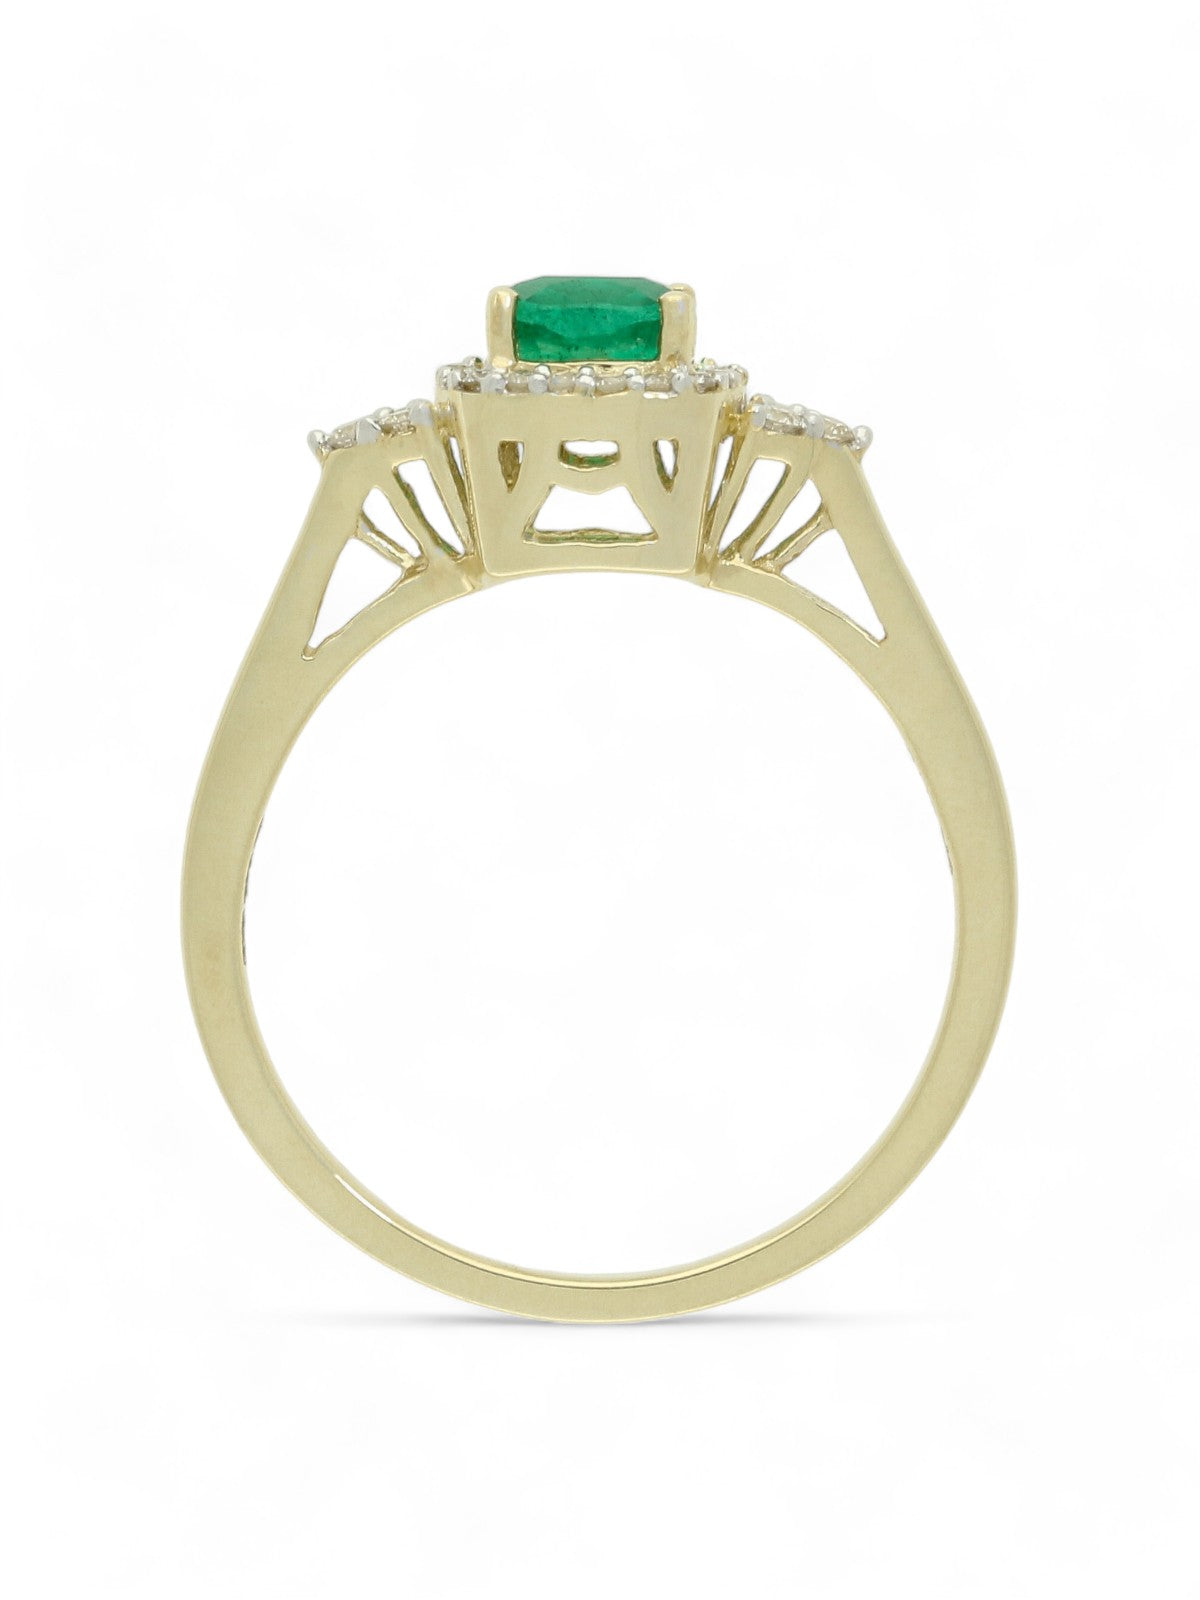 Emerald & Diamond Trefoil Halo Ring in 9ct Yellow Gold